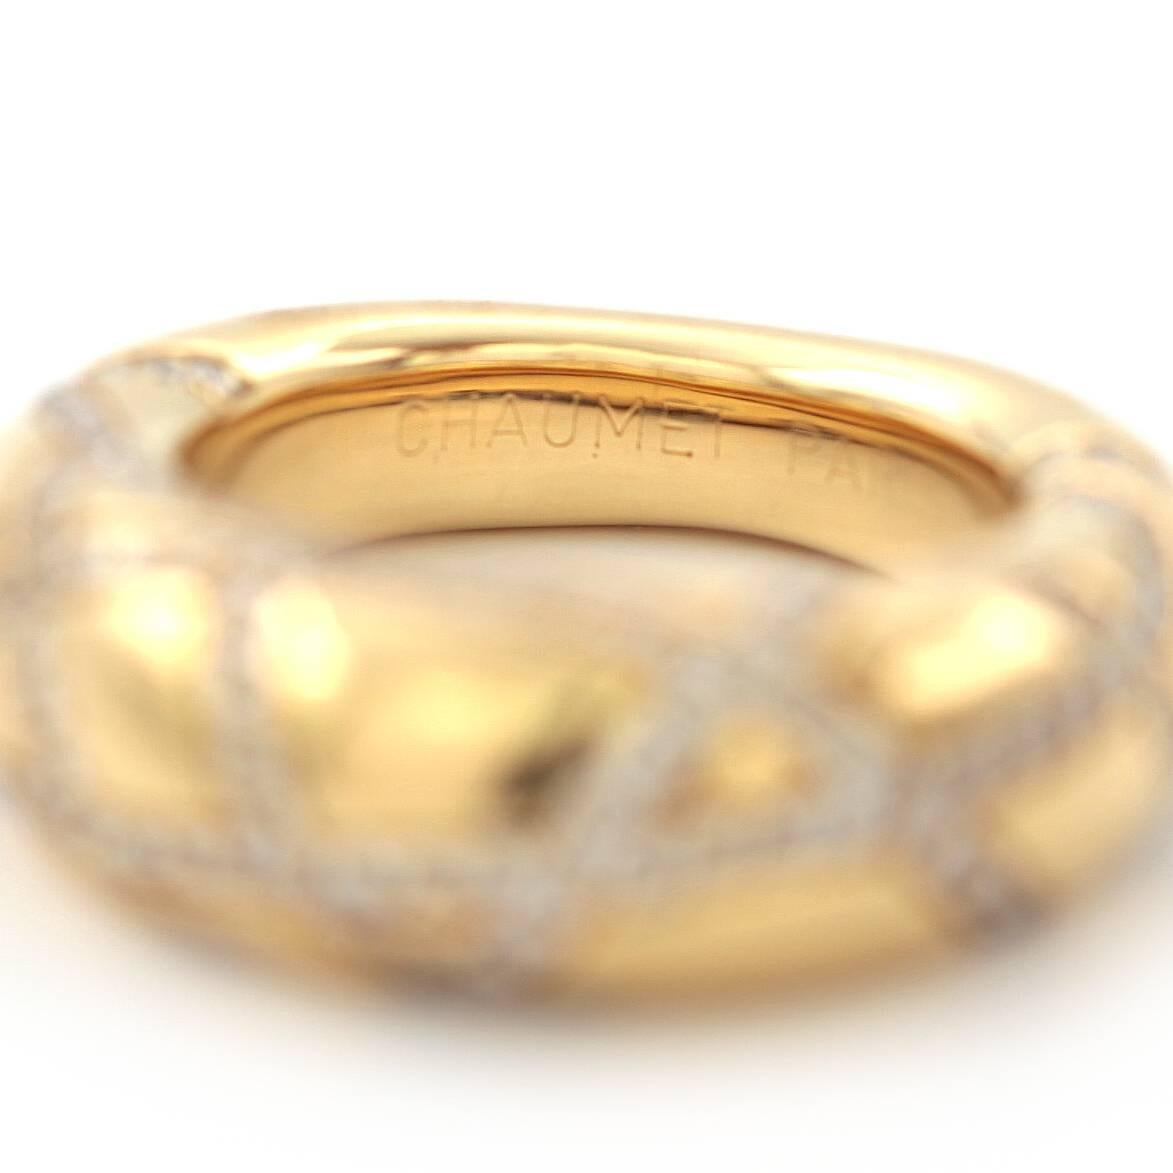 Modern Chaumet 18 Karat Yellow Gold Ring with Pave Diamonds